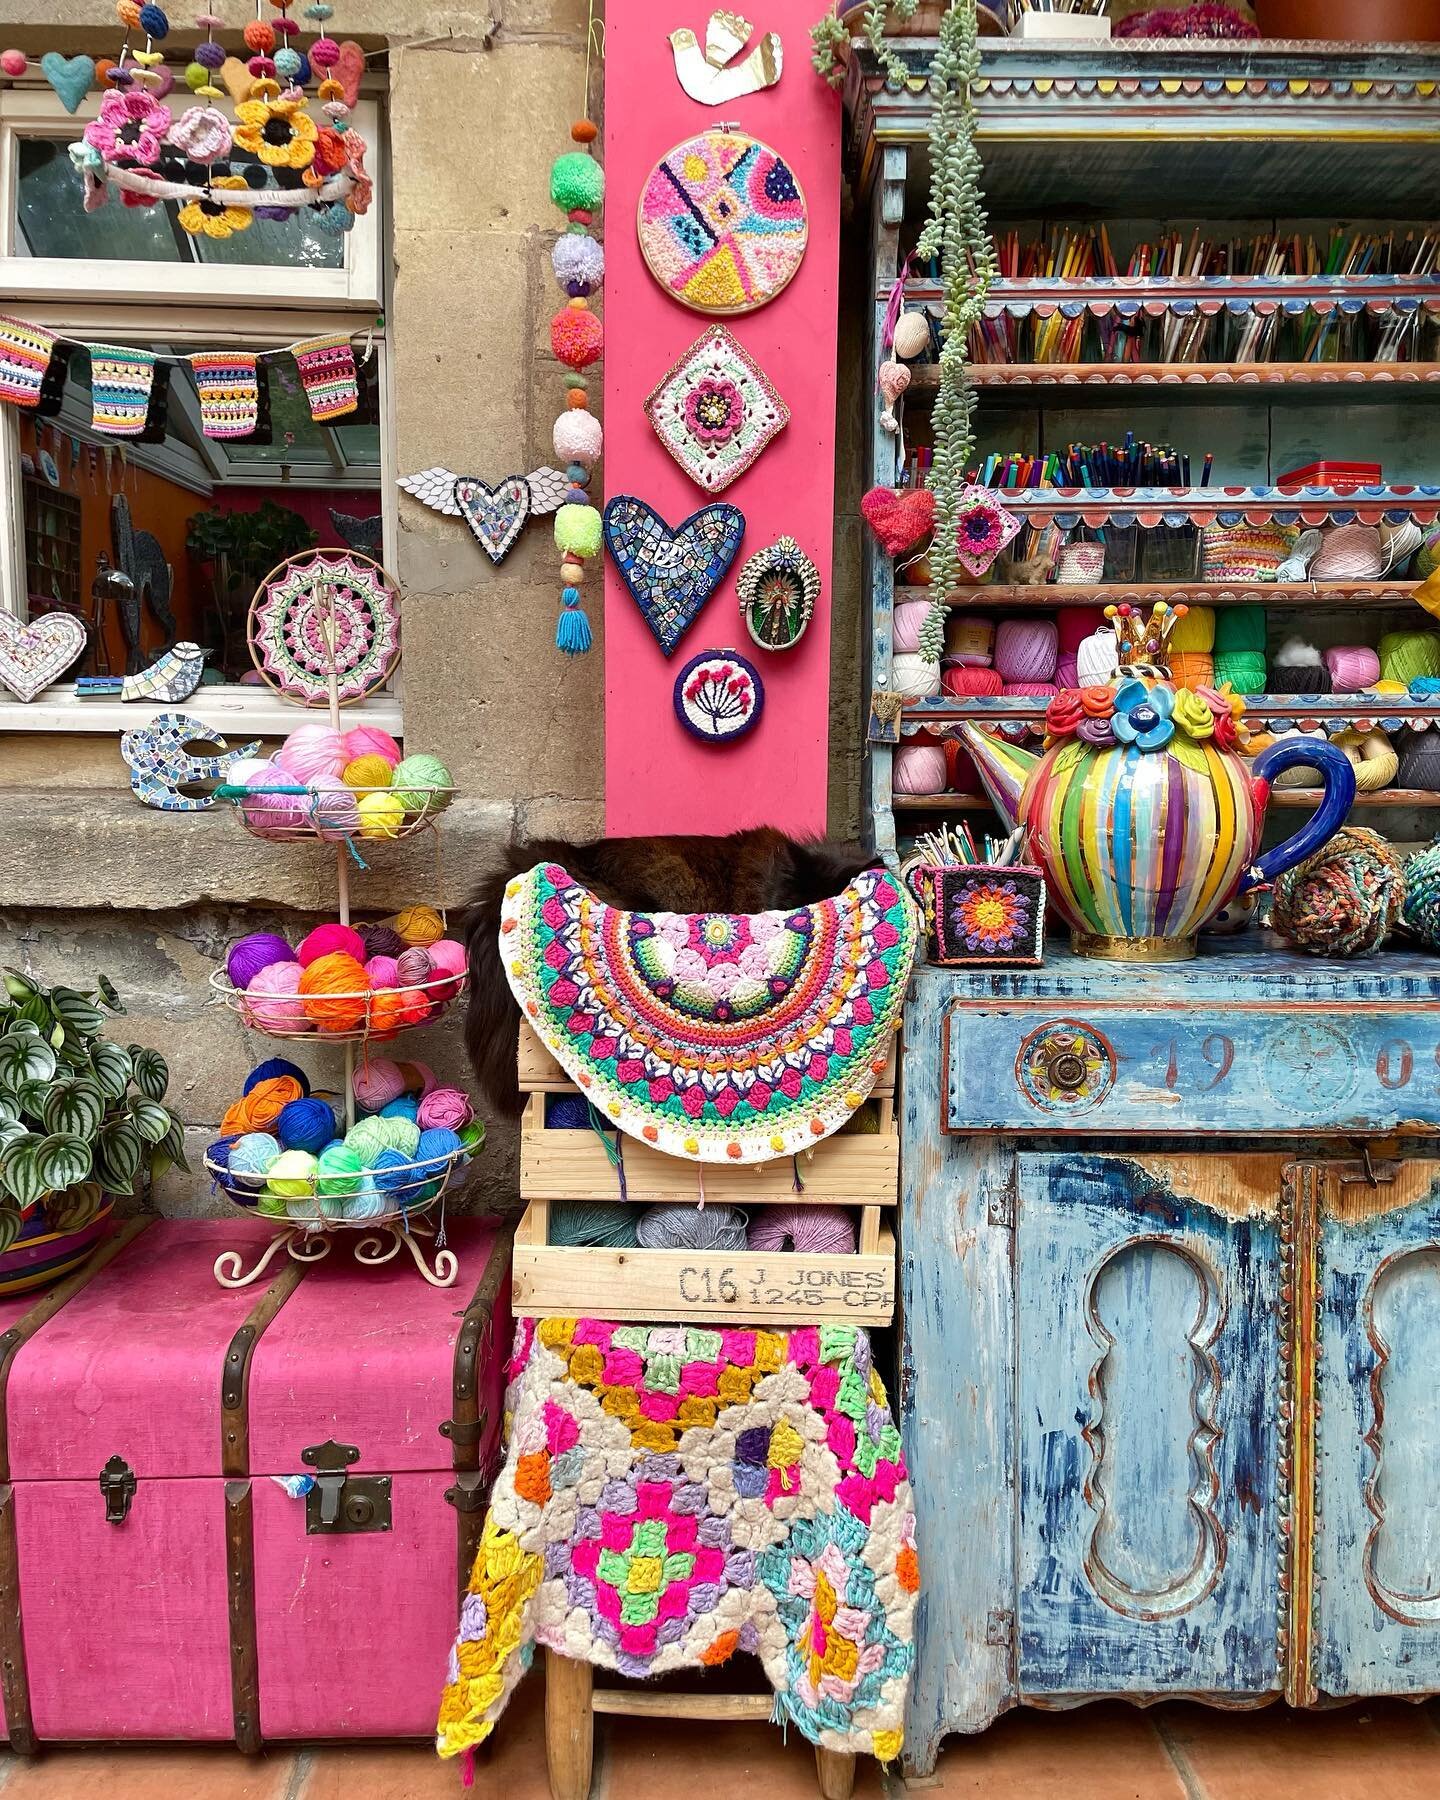 Spot the cat 😻

#crochetcorner #crochetstudio #crochetmandala #artiststudio #bohovibes #catsandcrochet #mosaicheart